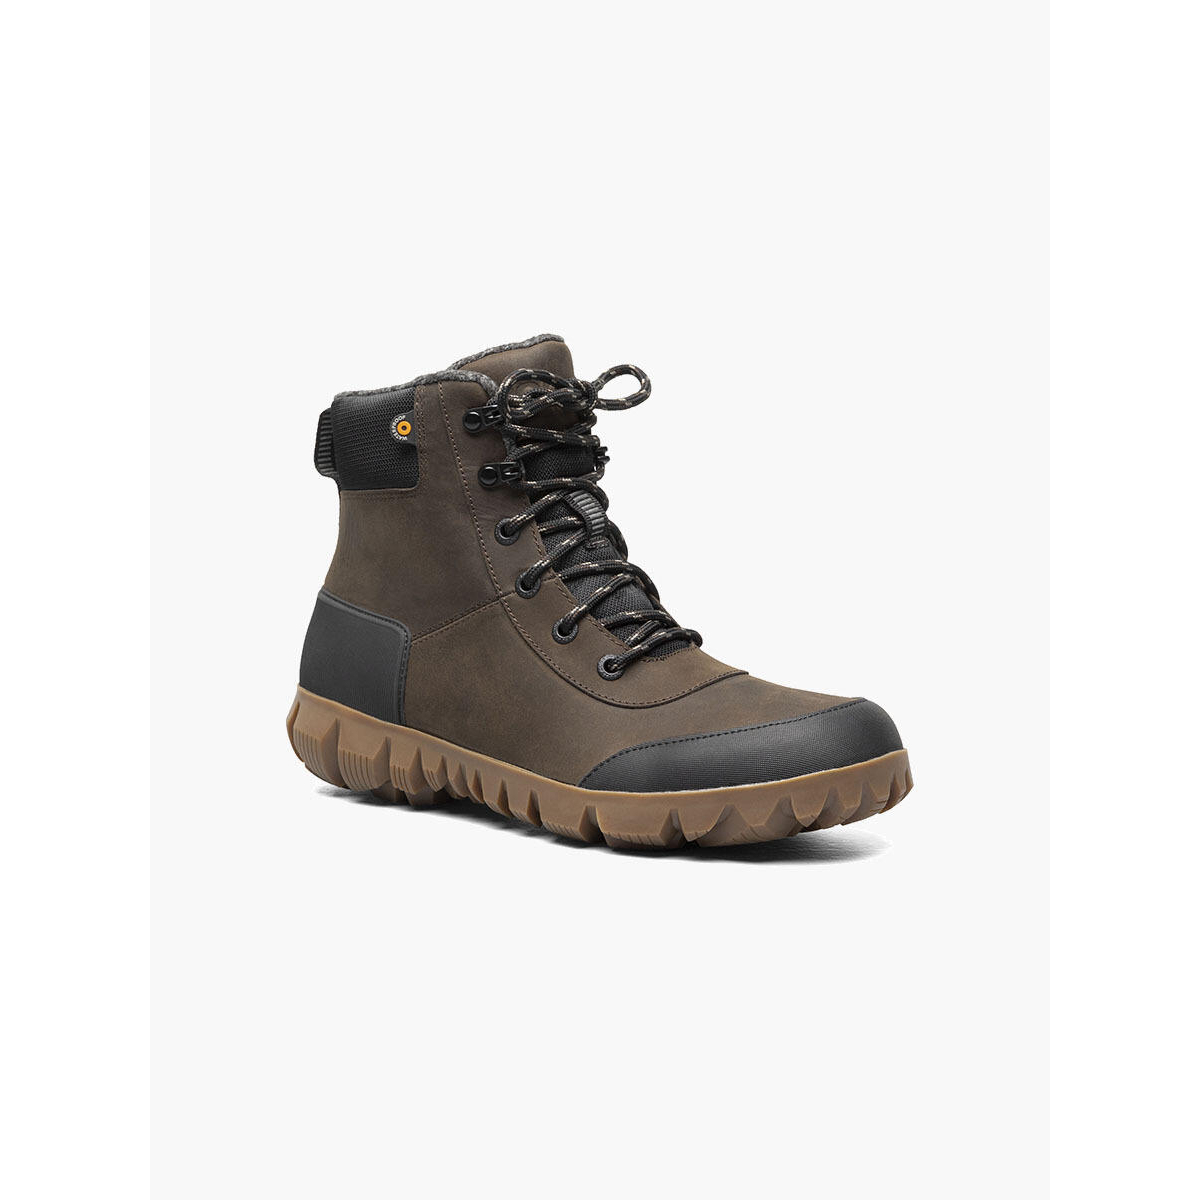 BOGS Men's Arcata Urban Leather Mid Winter Boots Chocolate - 72909-202 CHOCOLATE - CHOCOLATE, 13-M